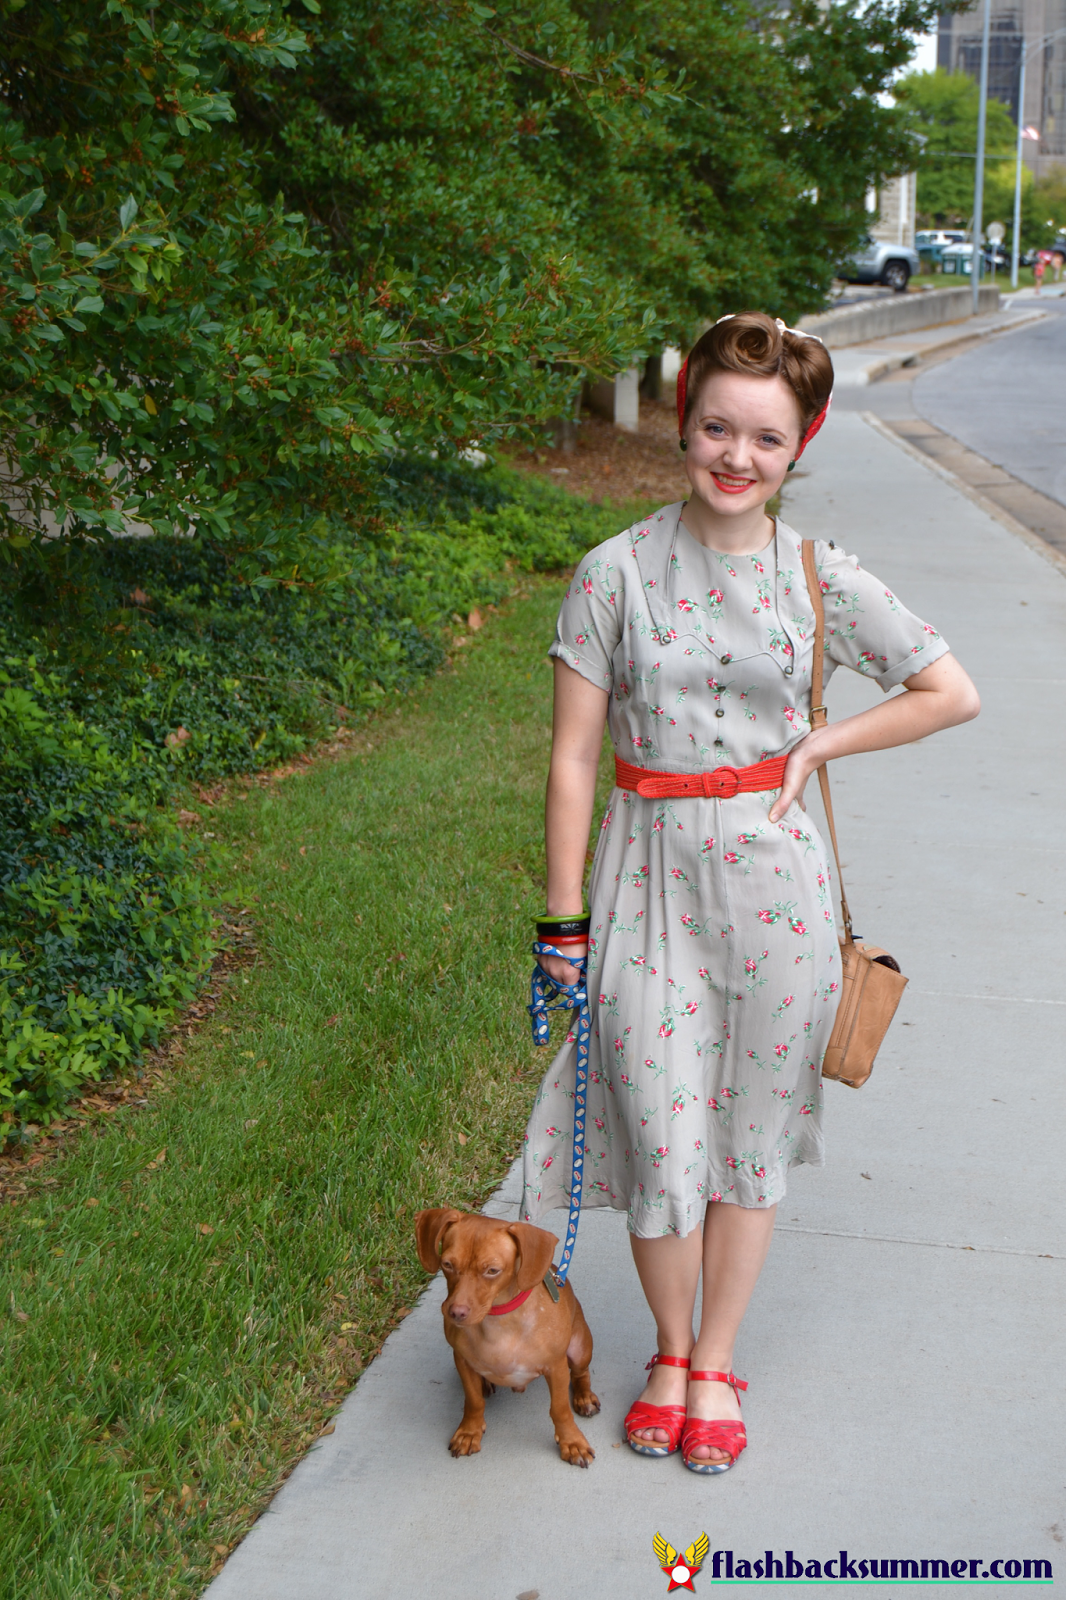 Flashback Summer: Cider Days 2014, Springfield Missouri, 1940s vintage outfit